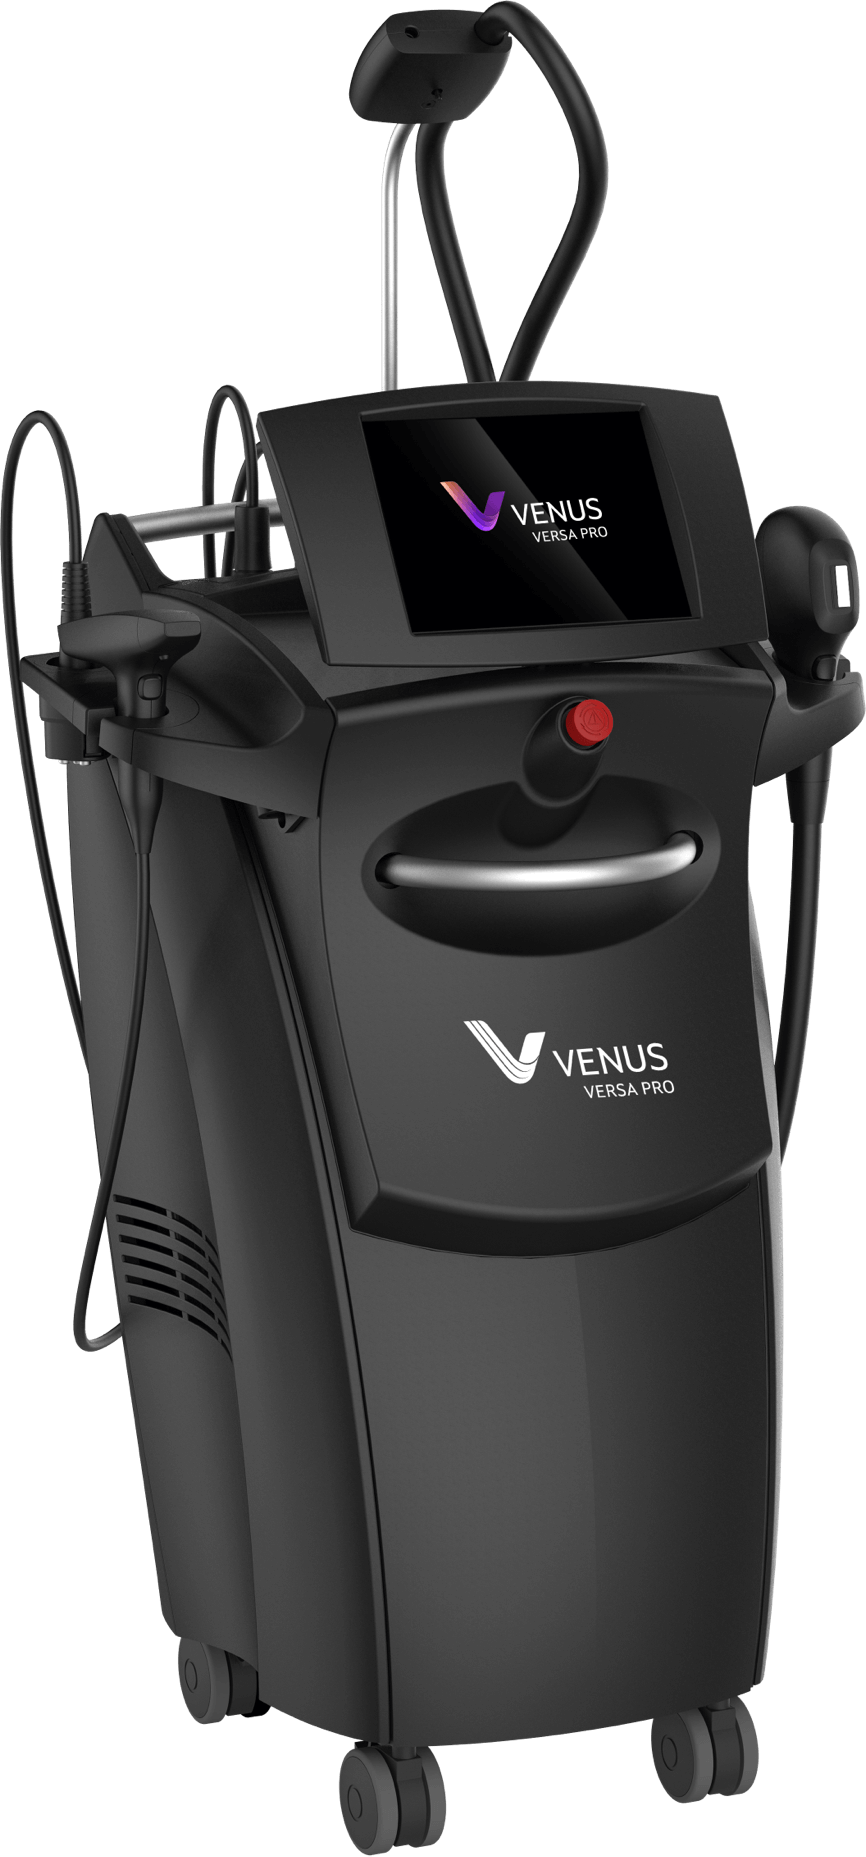 Venus Versa Related Device